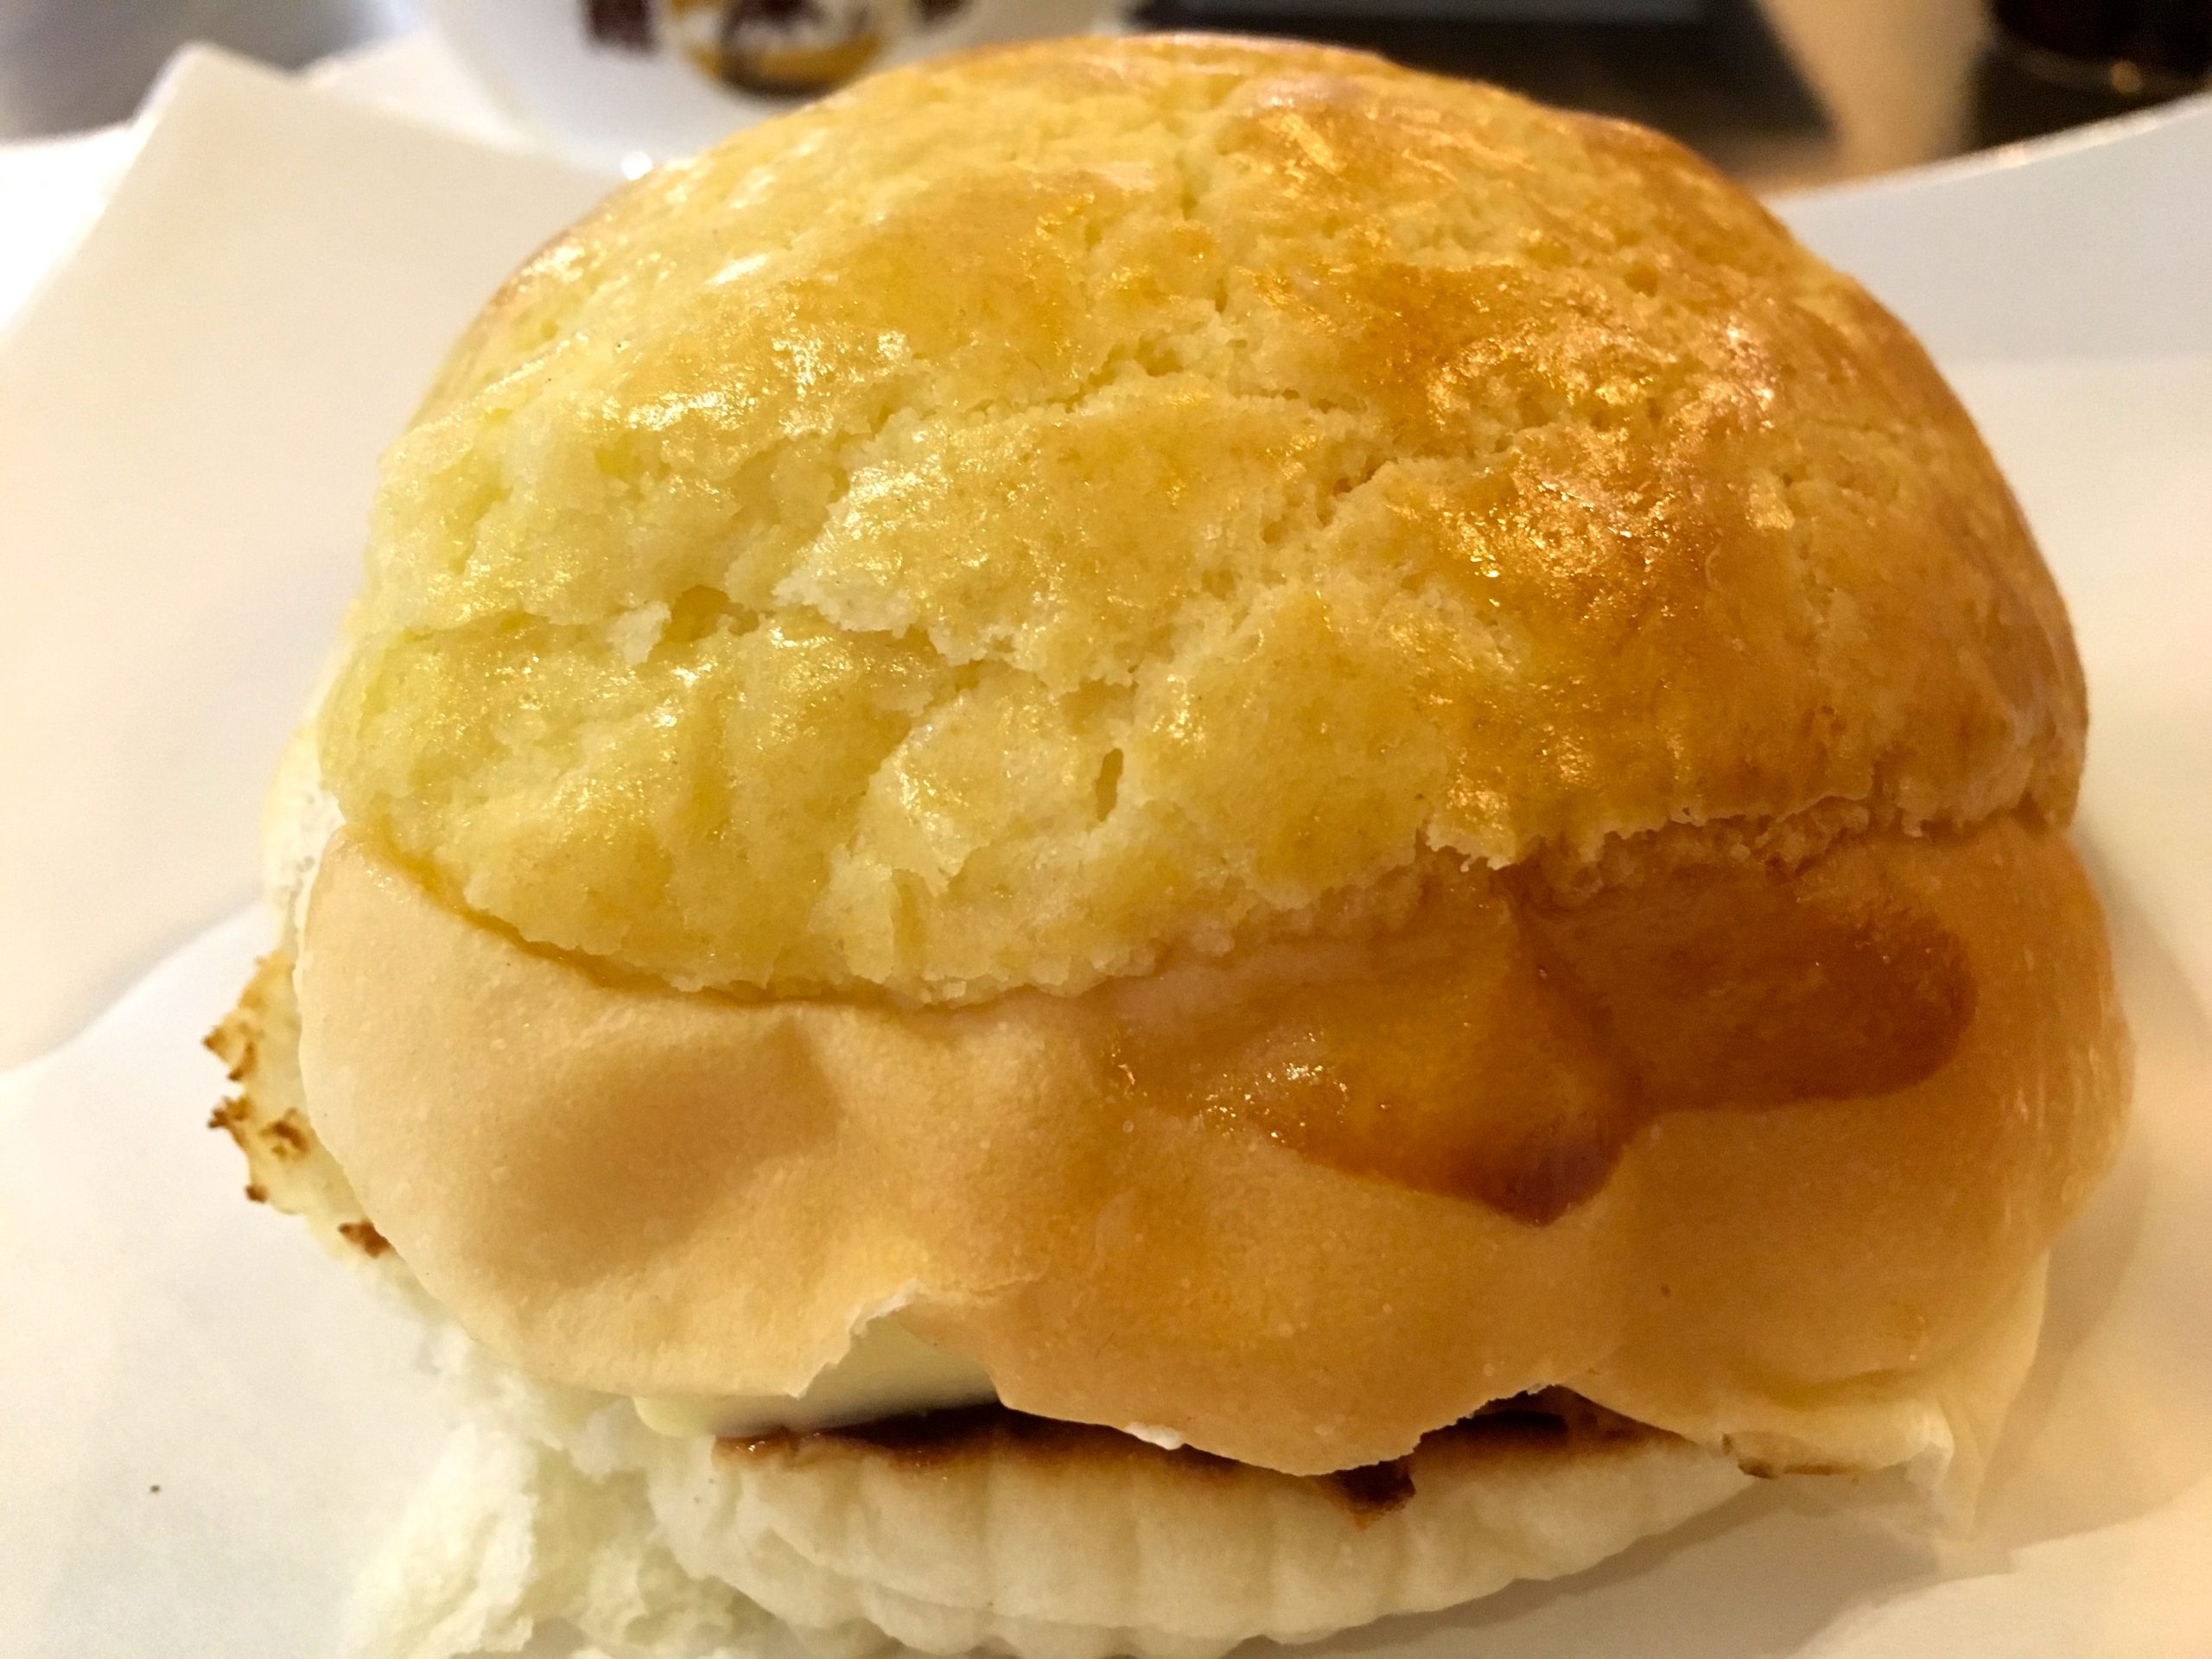 Honolulu Cafe - Pineapple Bun with Butter